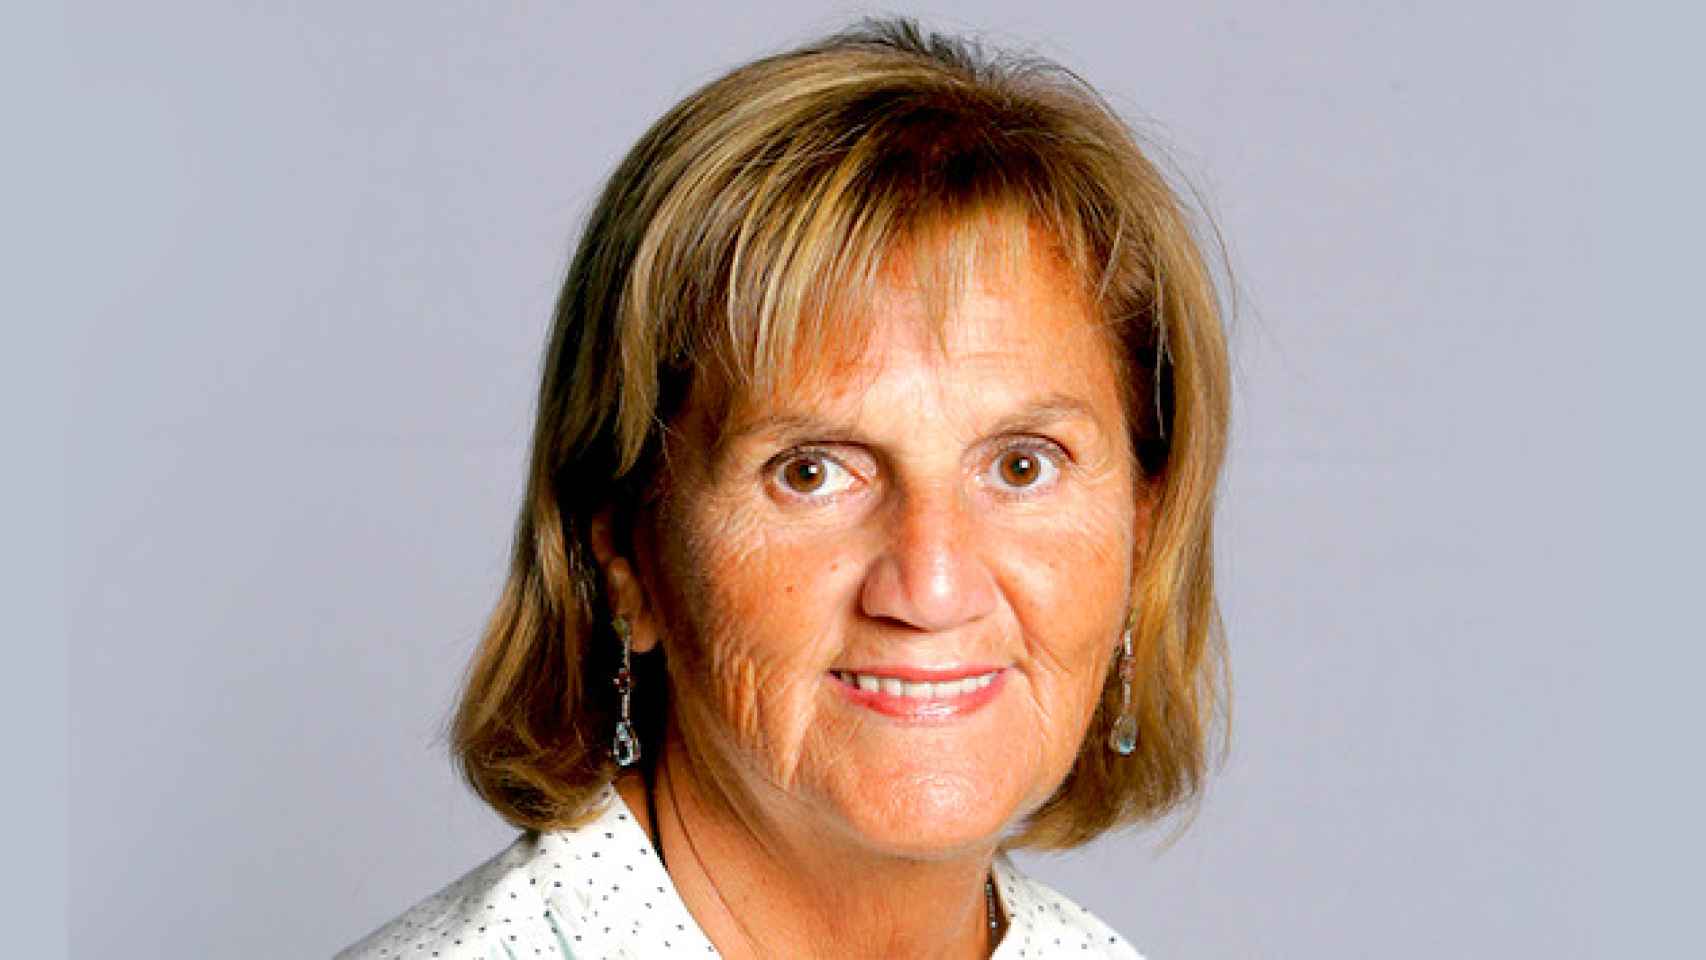 Núria de Gispert, expresidenta del Parlament